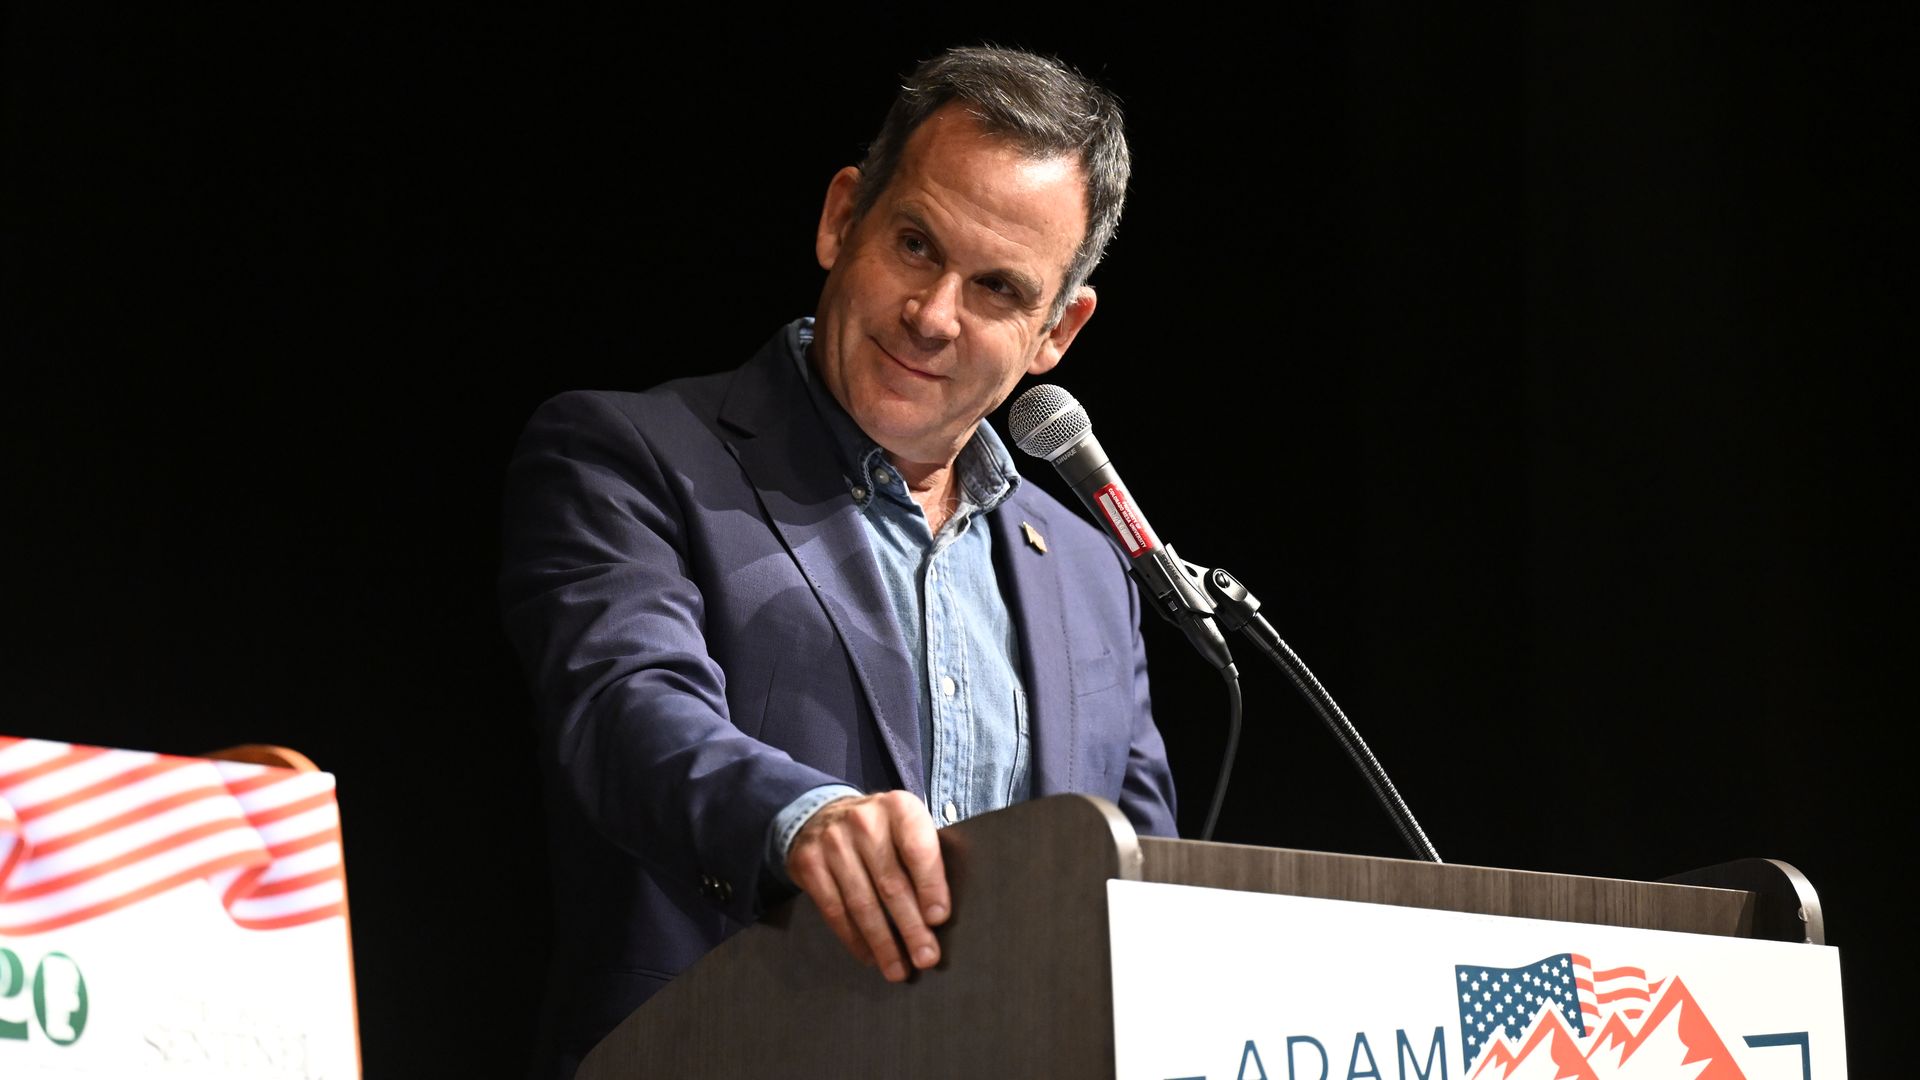 Adam Frisch at a debate in 2022. Photo: RJ Sangosti/Denver Post via Getty Images